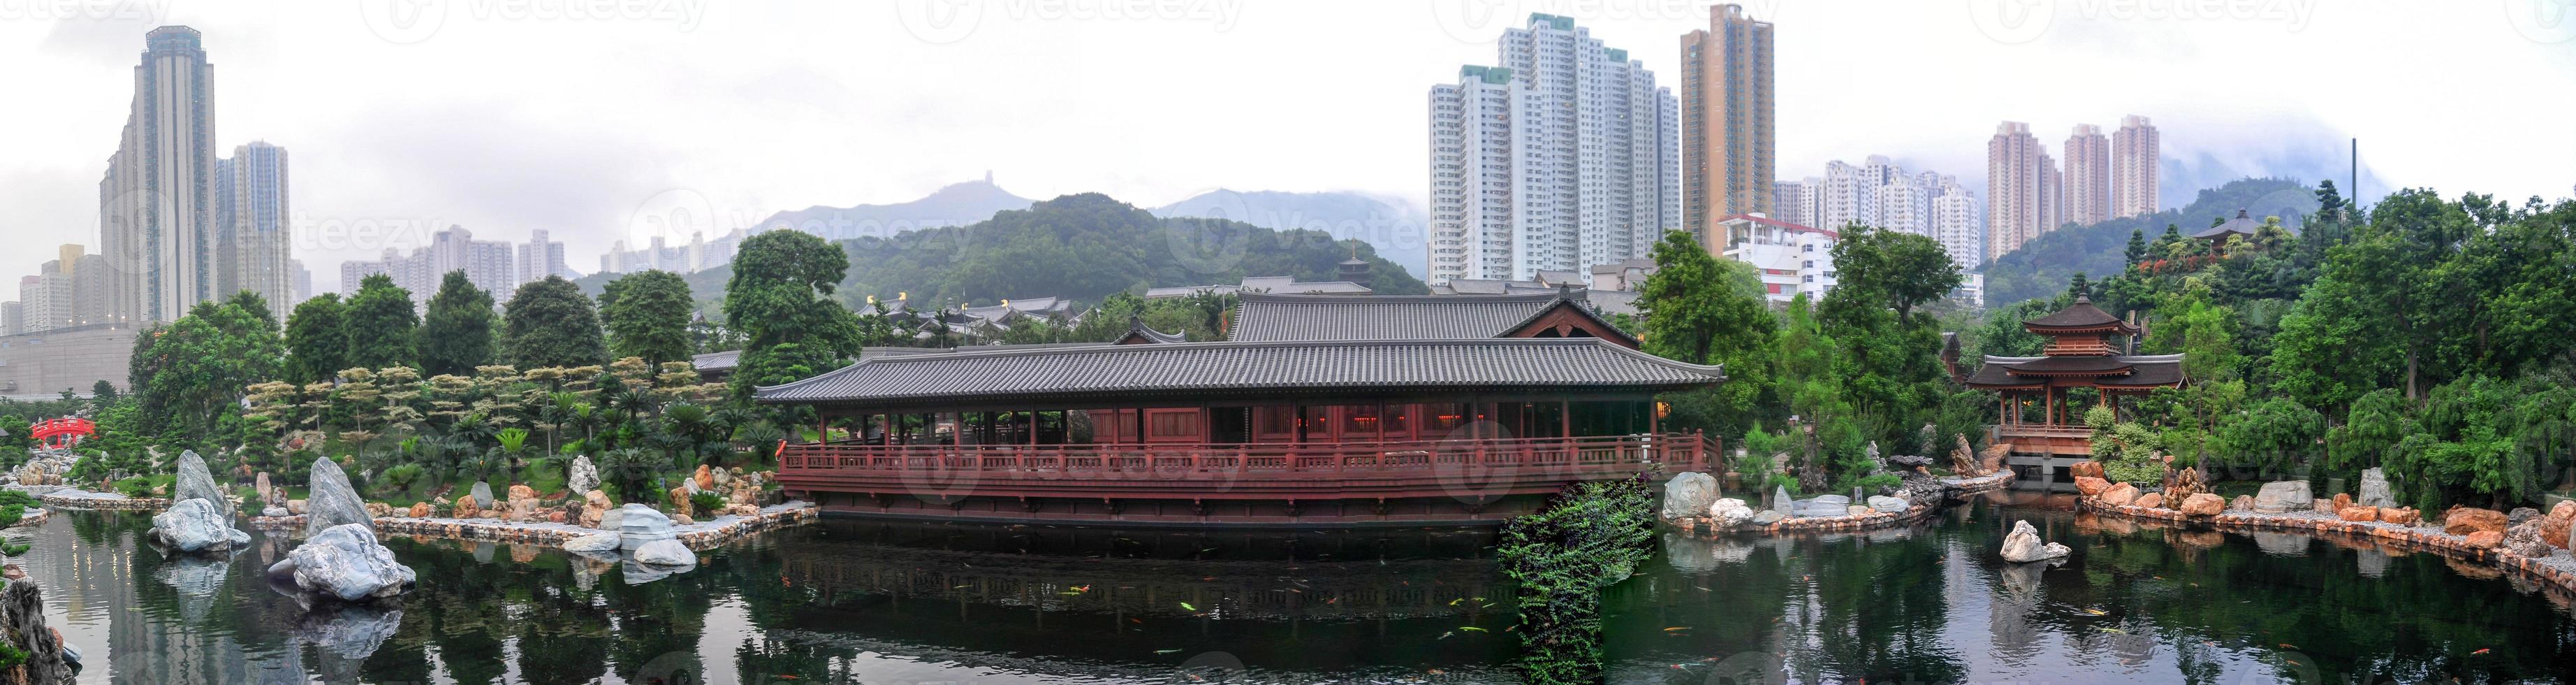 Golden Pavilion of Nan Lian Garden, Hong Kong photo